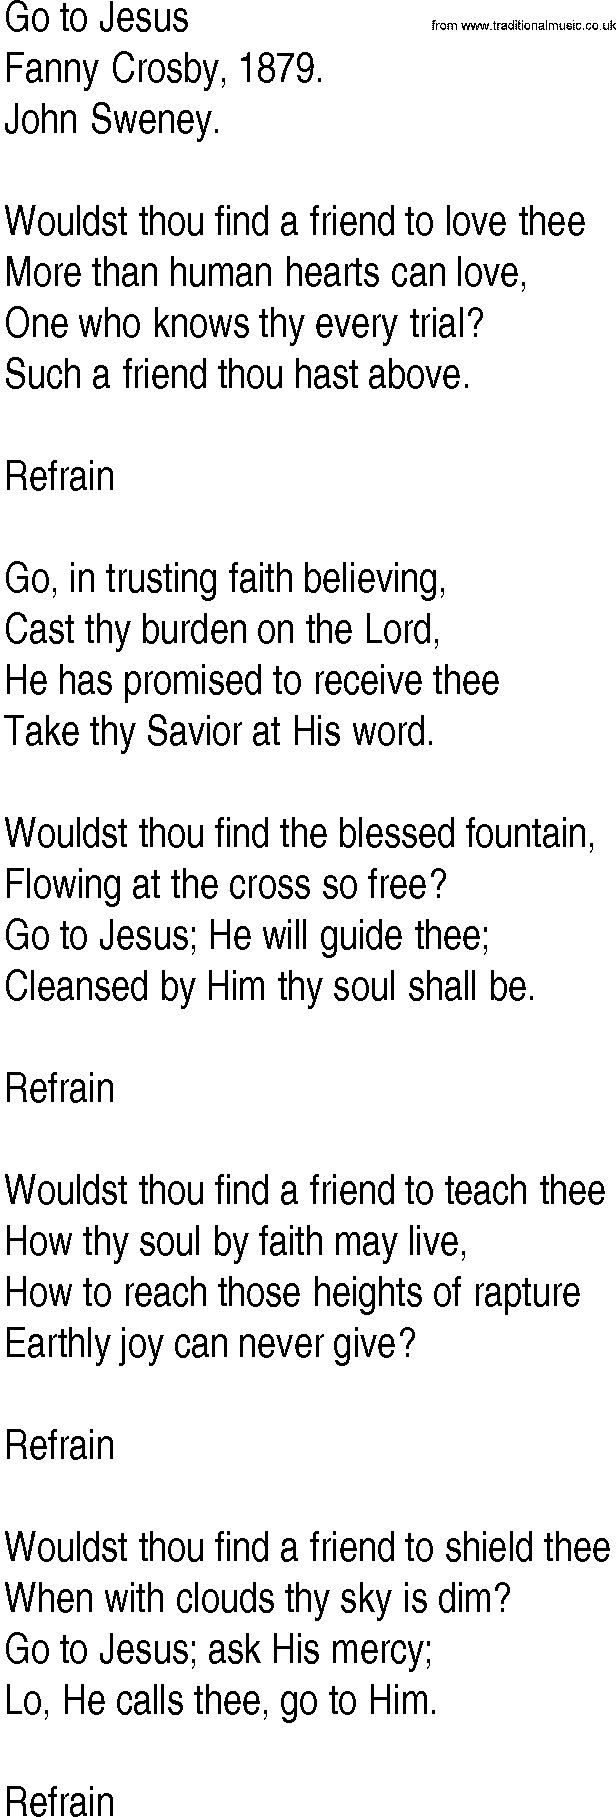 Hymn and Gospel Song: Go to Jesus by Fanny Crosby lyrics